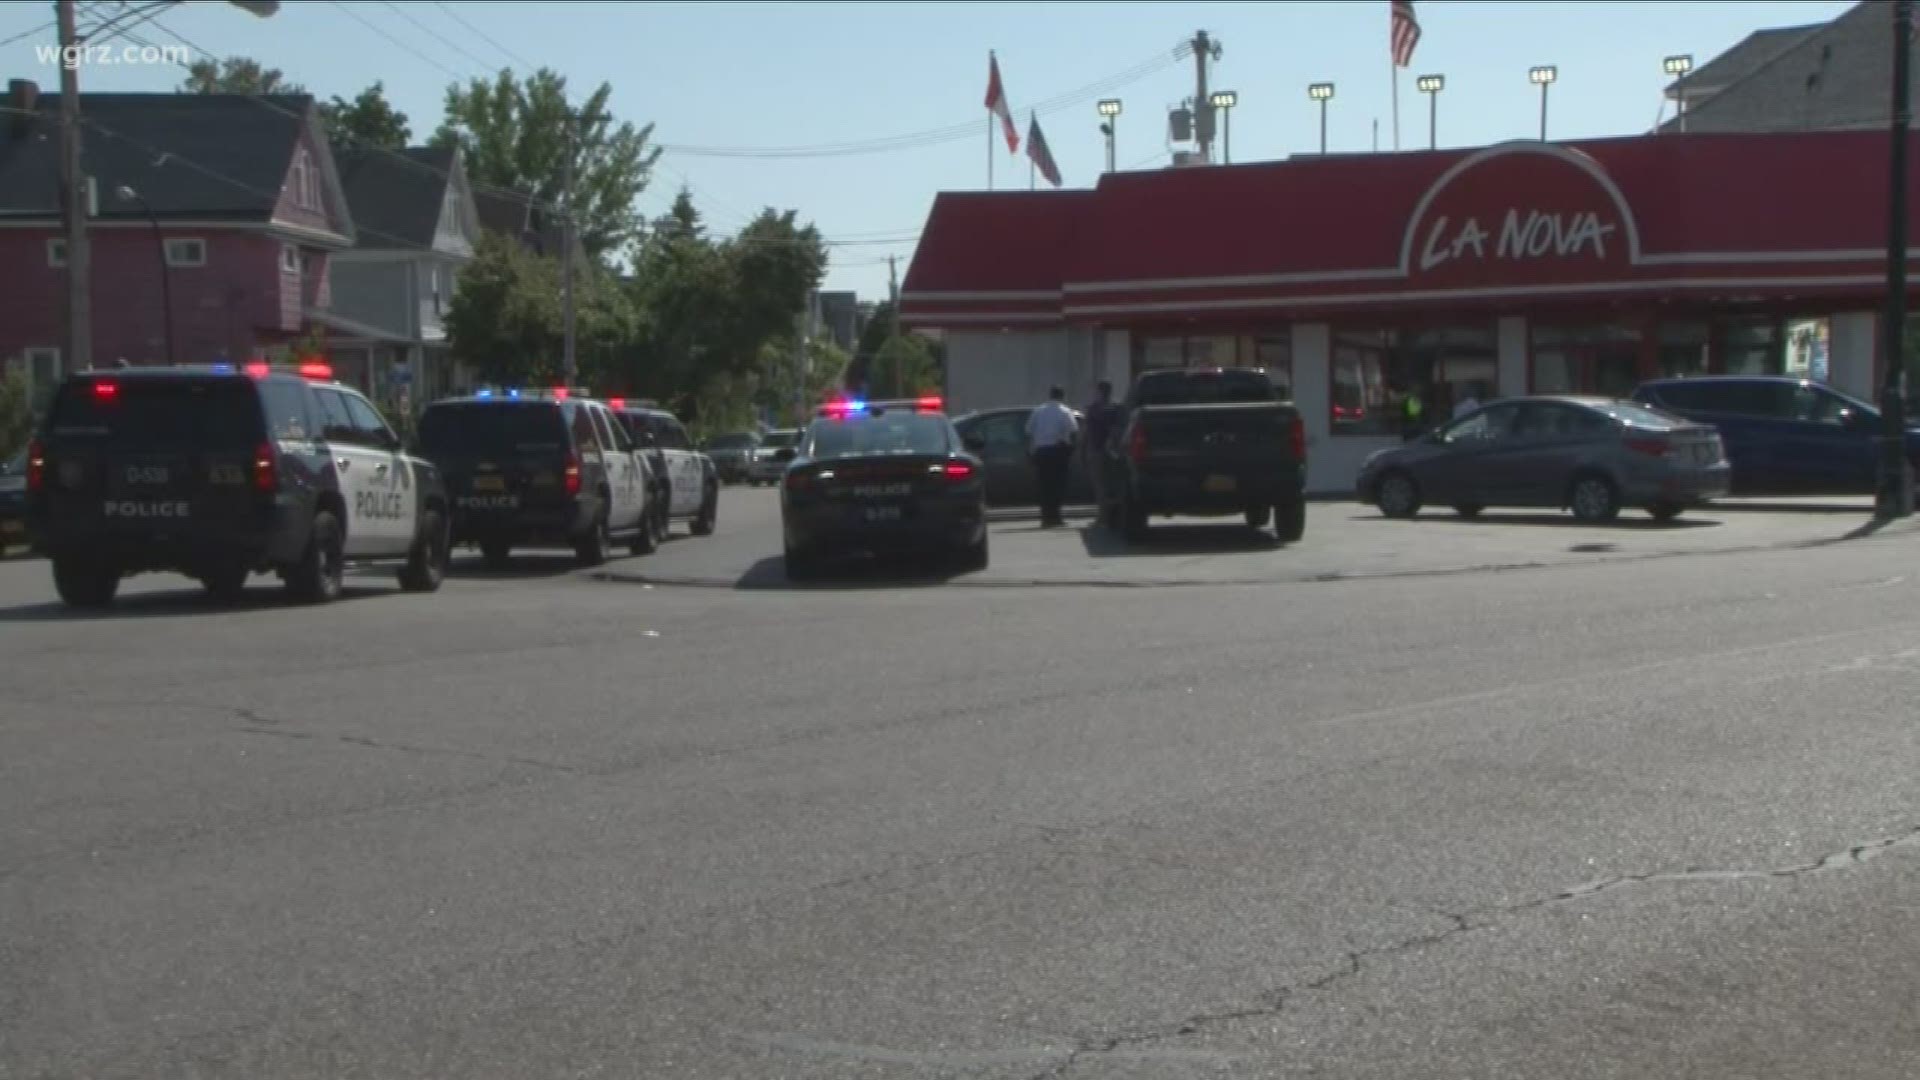 Man shot near LaNova pizza on the west side